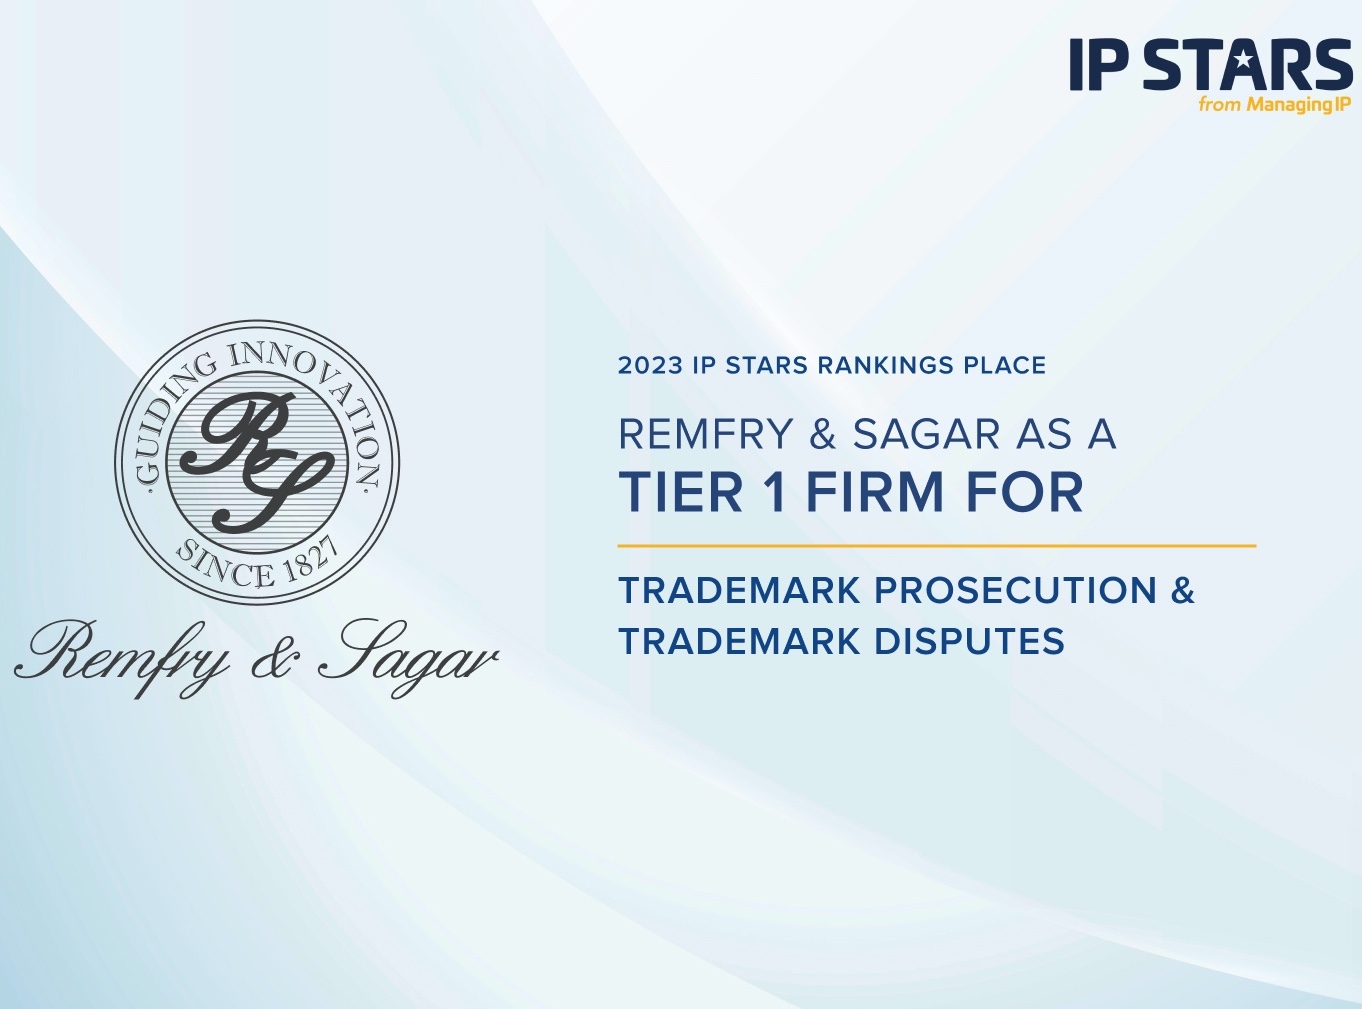 Managing IP’s IPSTARS 2023 Rankings